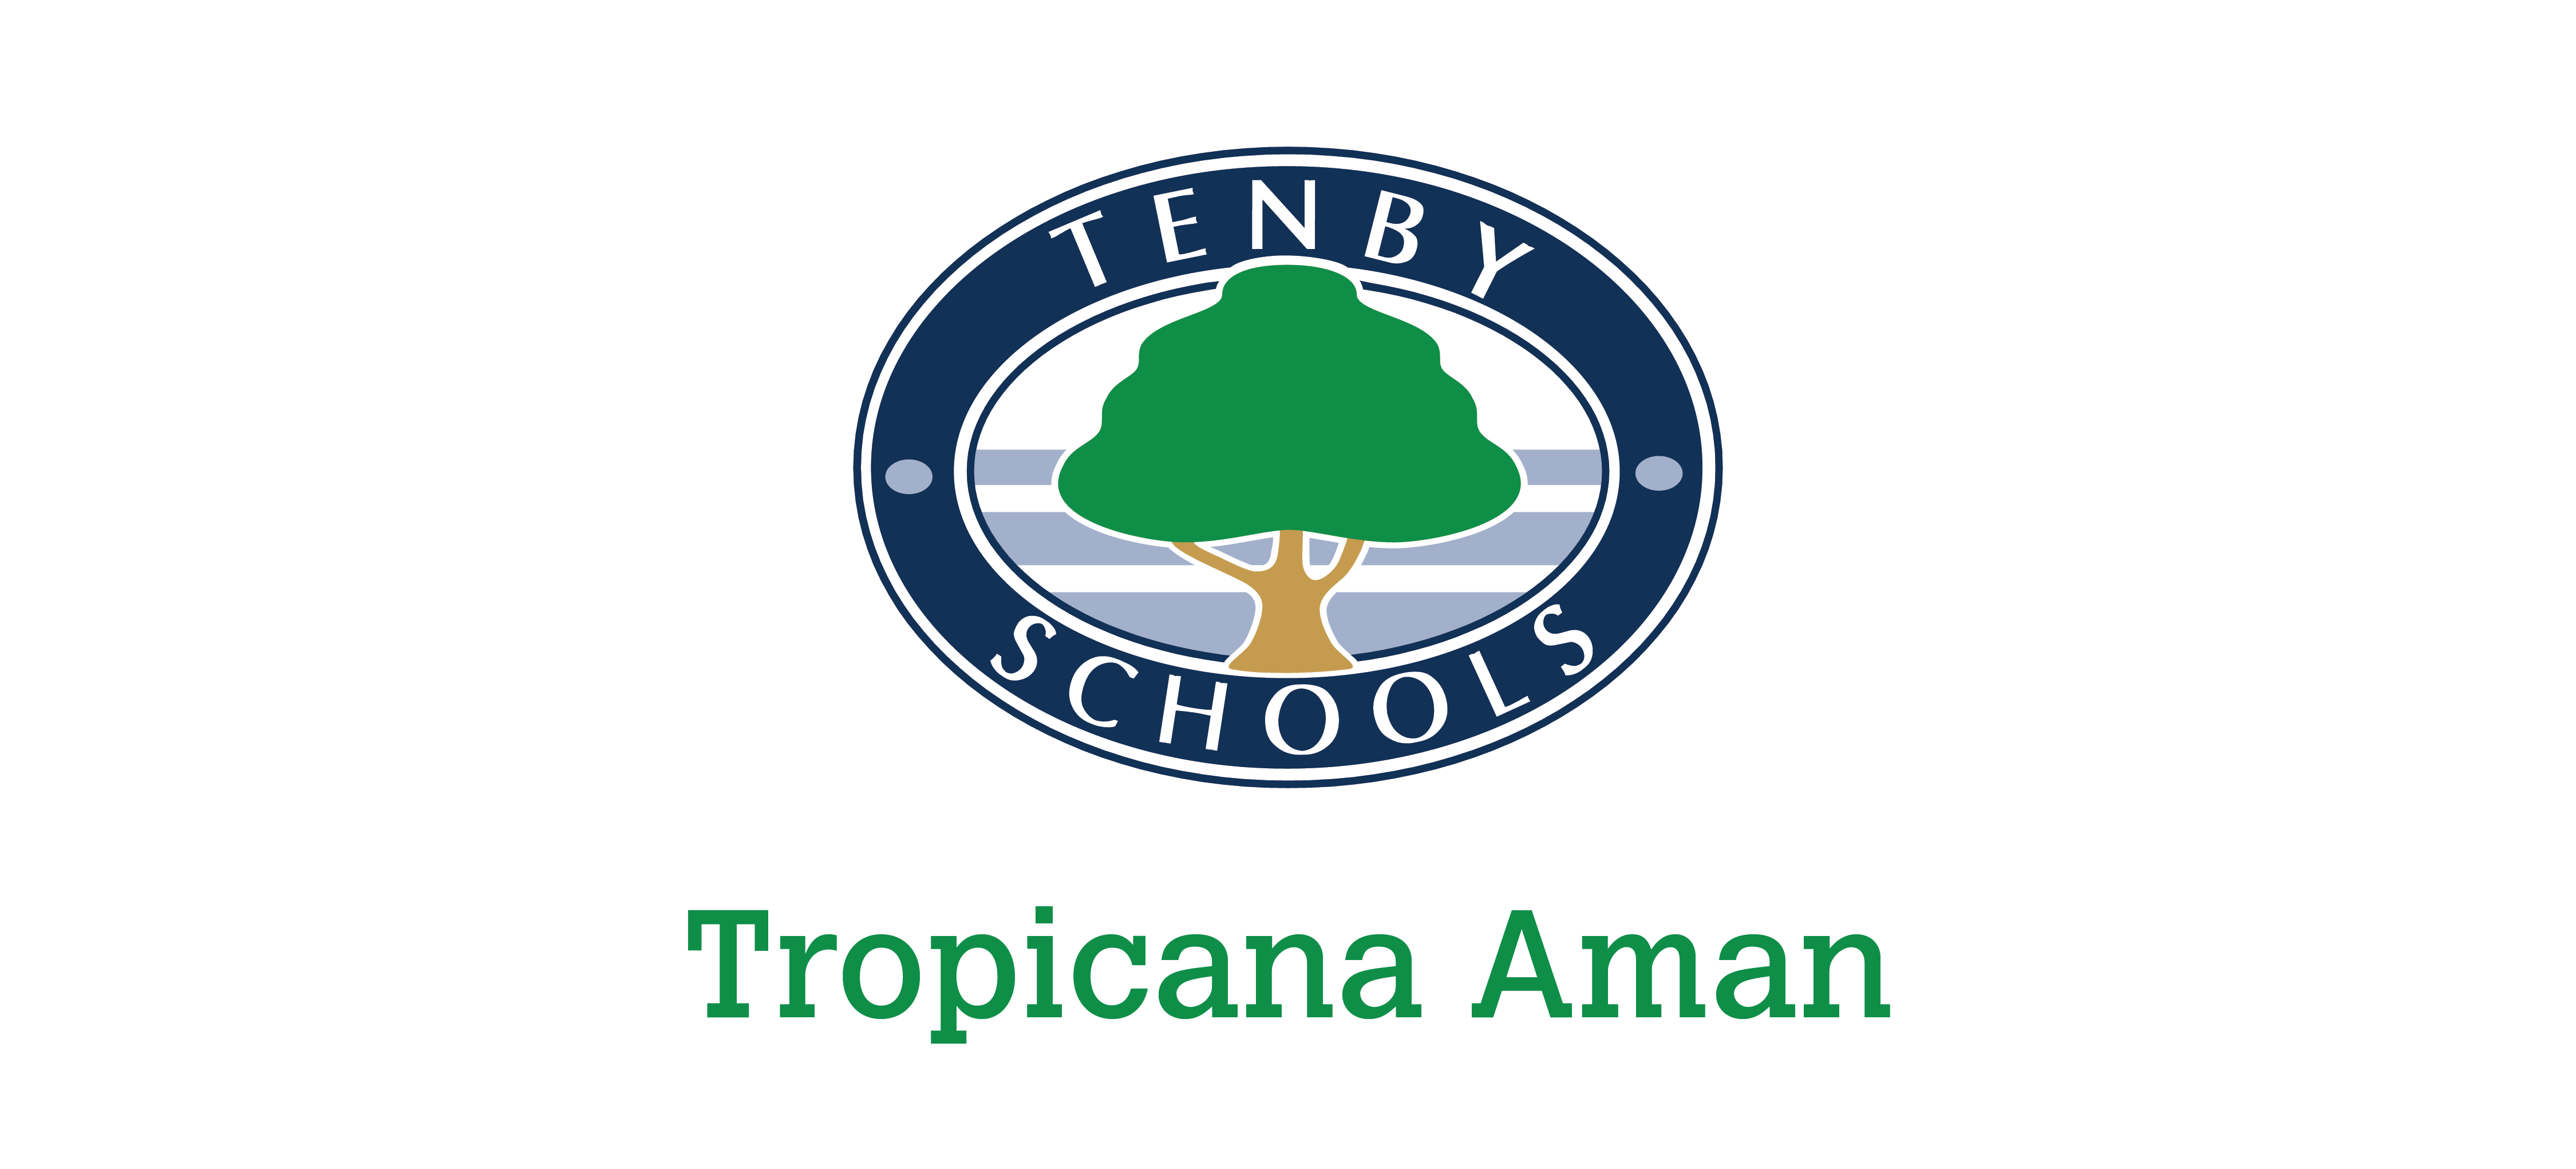 Tenby International School Tropicana Aman-01